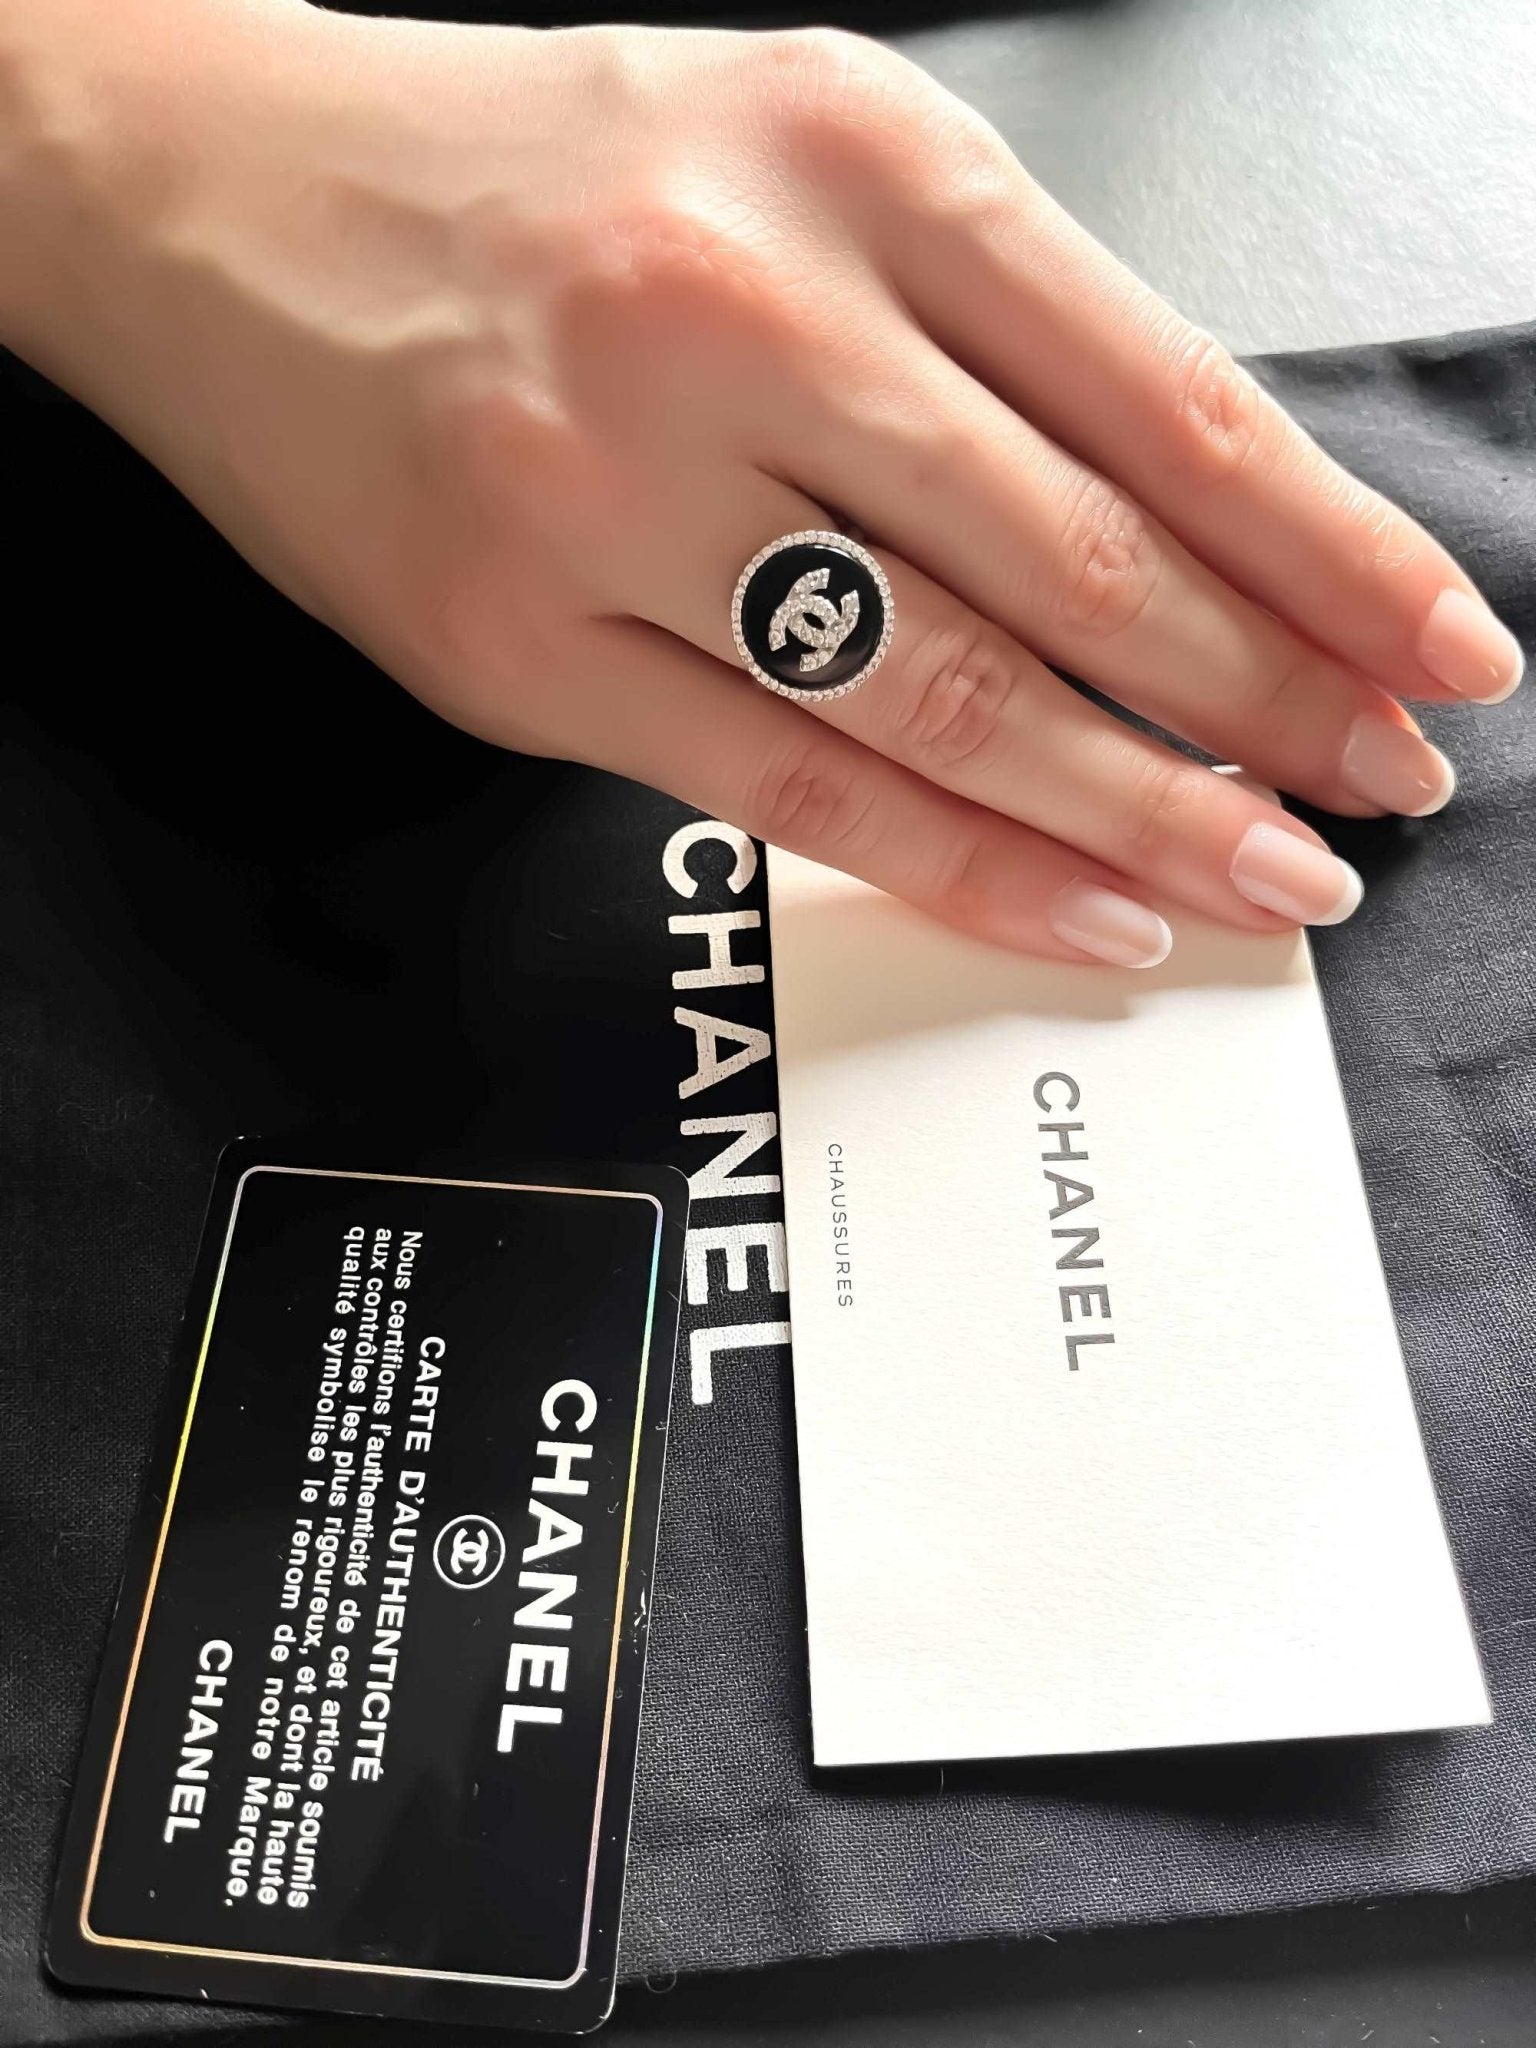 Chanel Vintage Jewelry 925 Sterling Silver Enamel Ring - Tracesilver